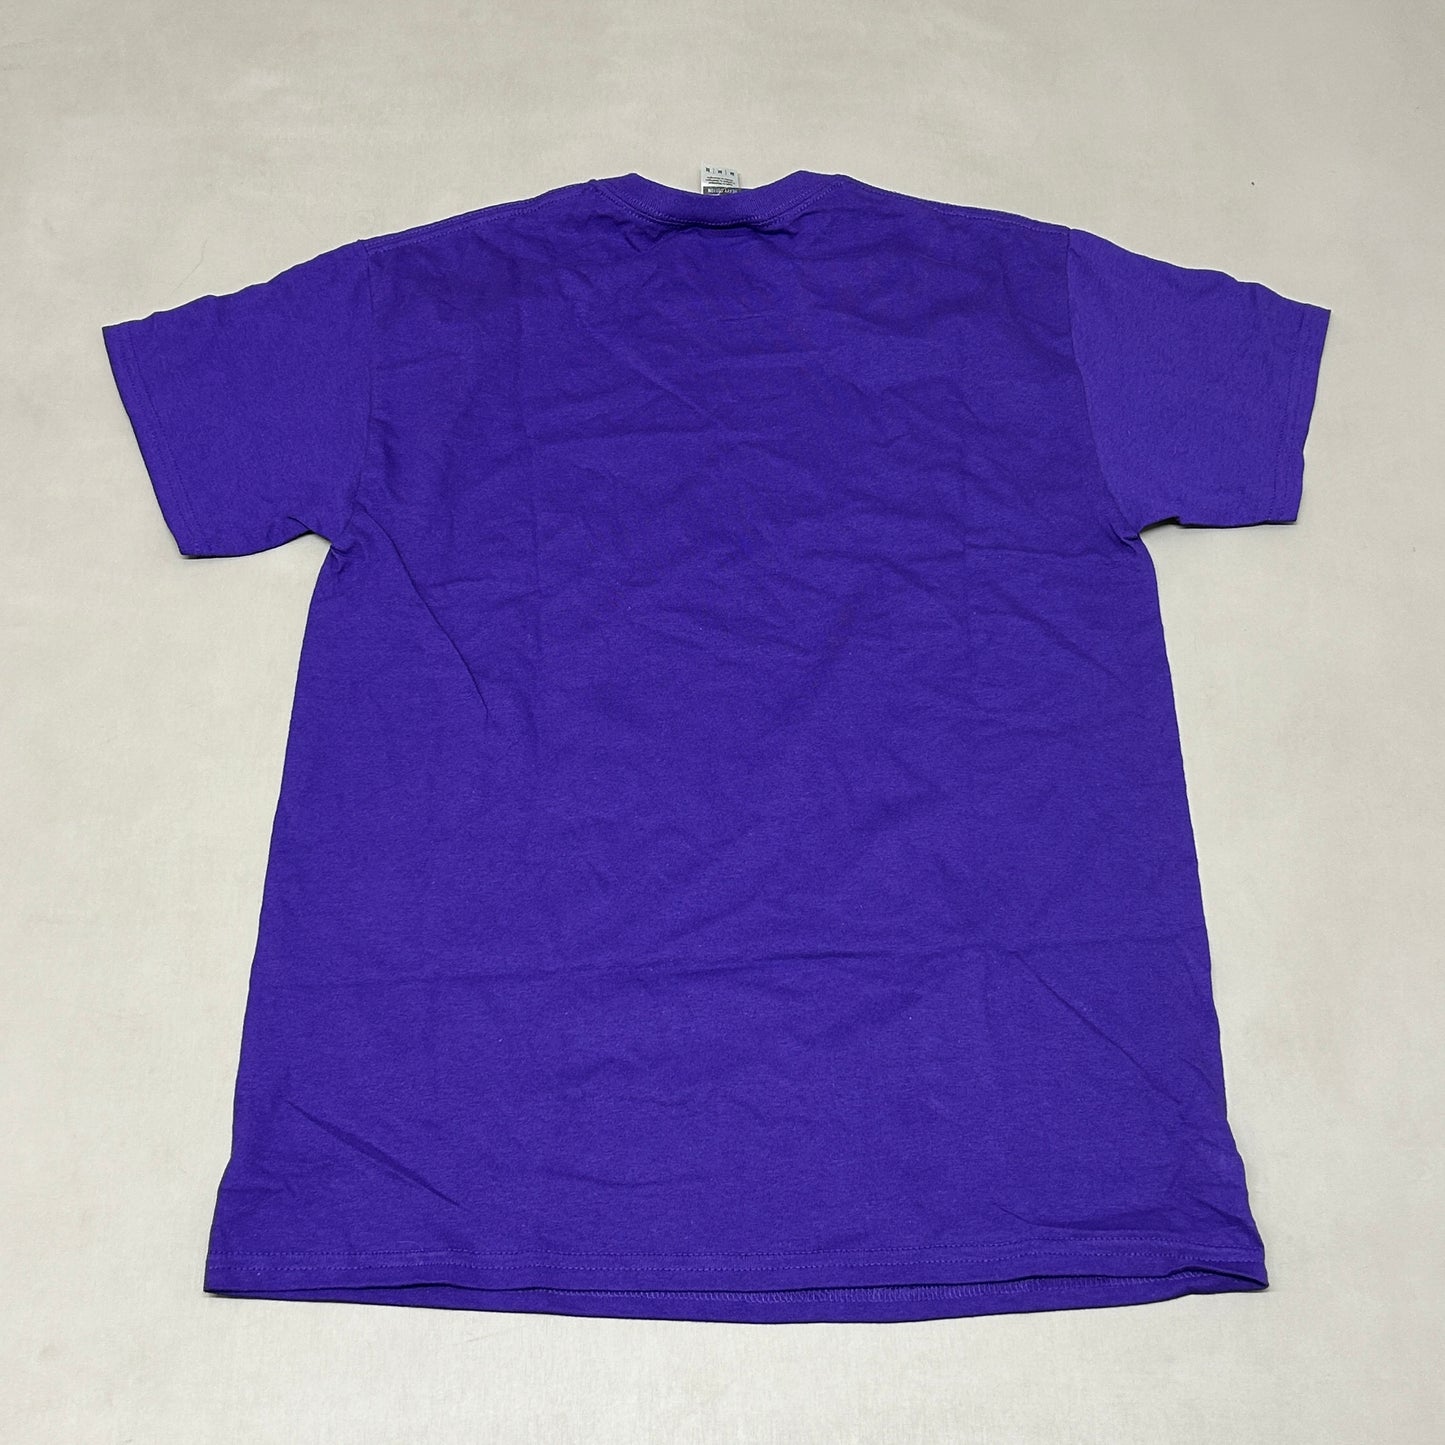 GILDAN College of the Holy Cross Heritage T-Shirt Cotton Unisex Sz XL Purple (New)